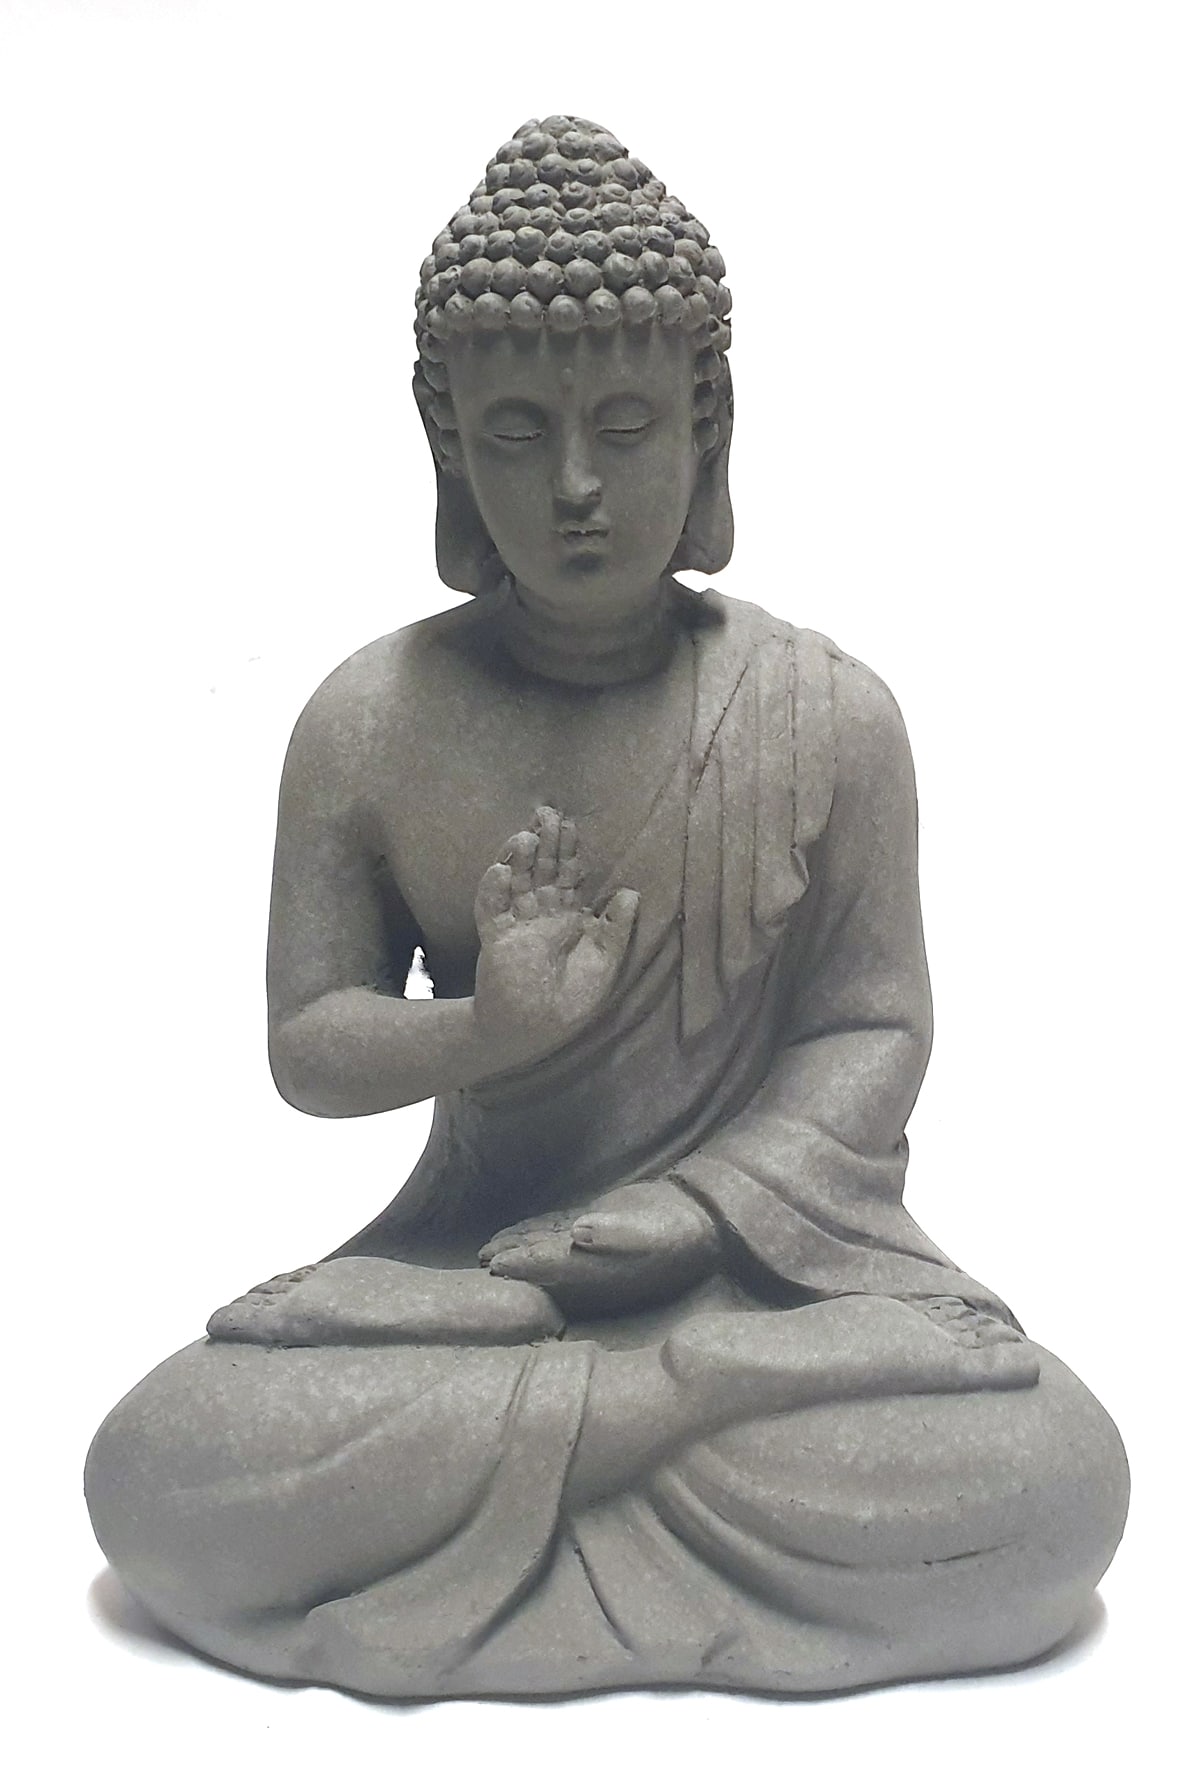 Boeddha beeld tuin zittend 29 cm groot | Boeddhabeeld.be